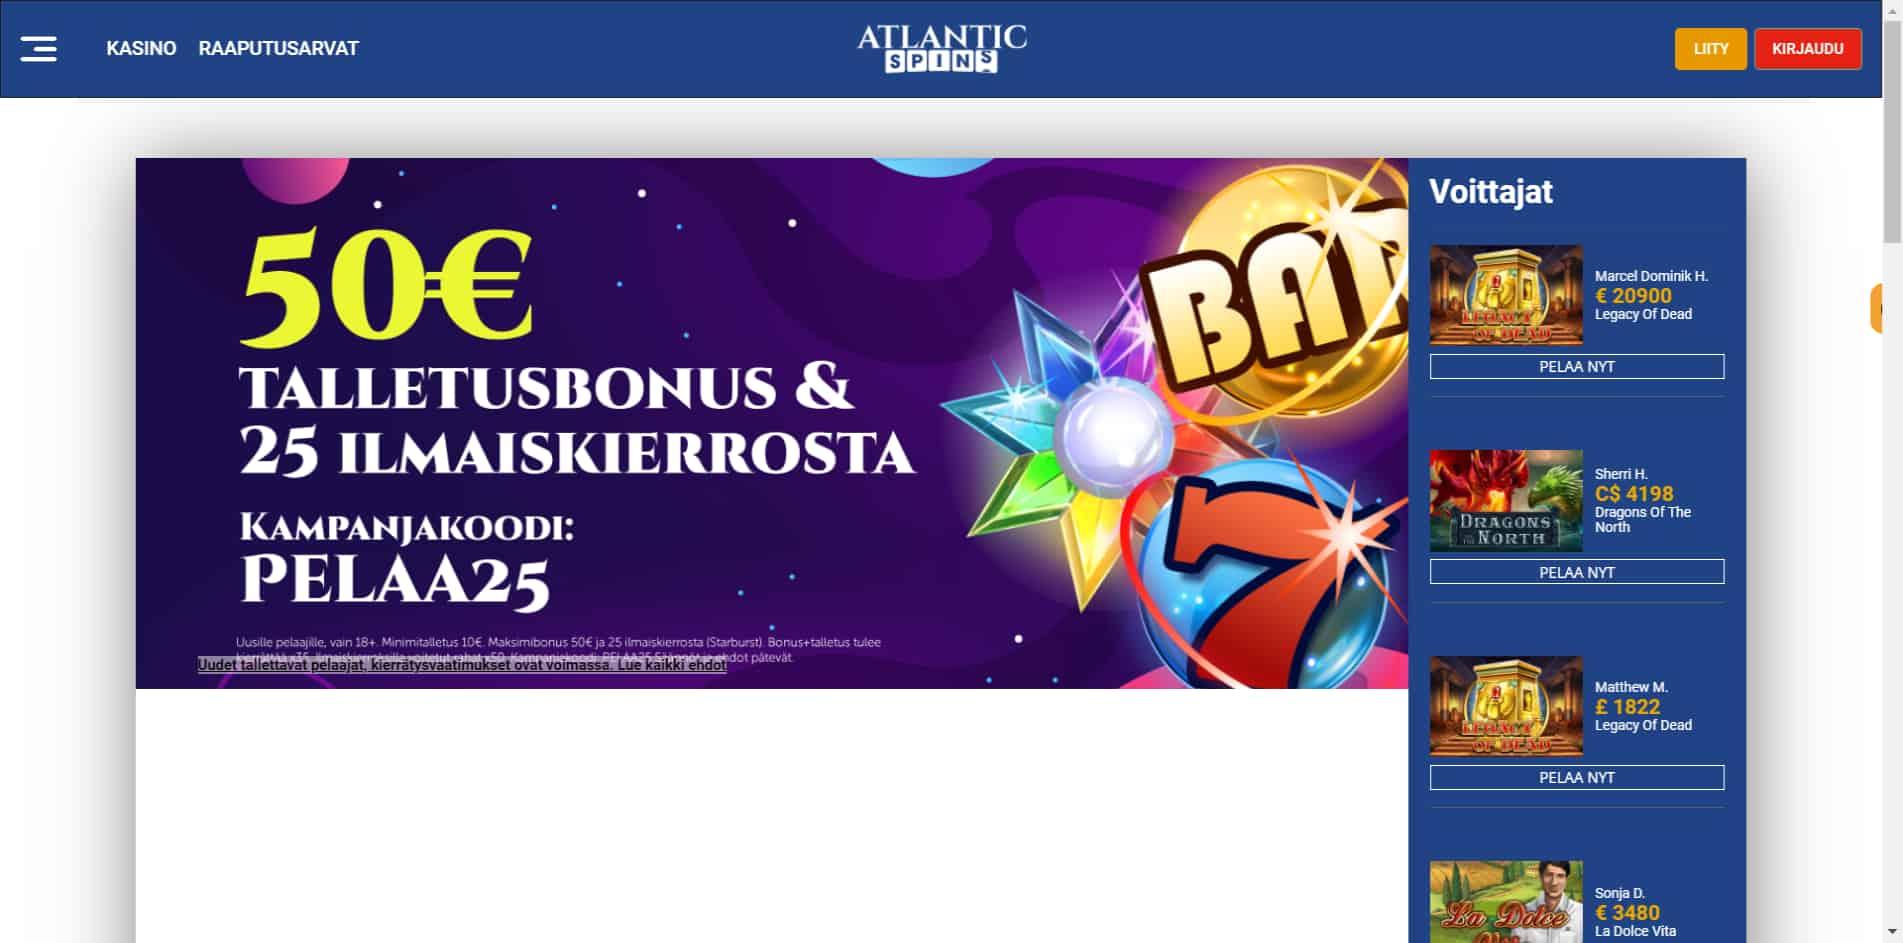 Atlantic Spins casino homepage